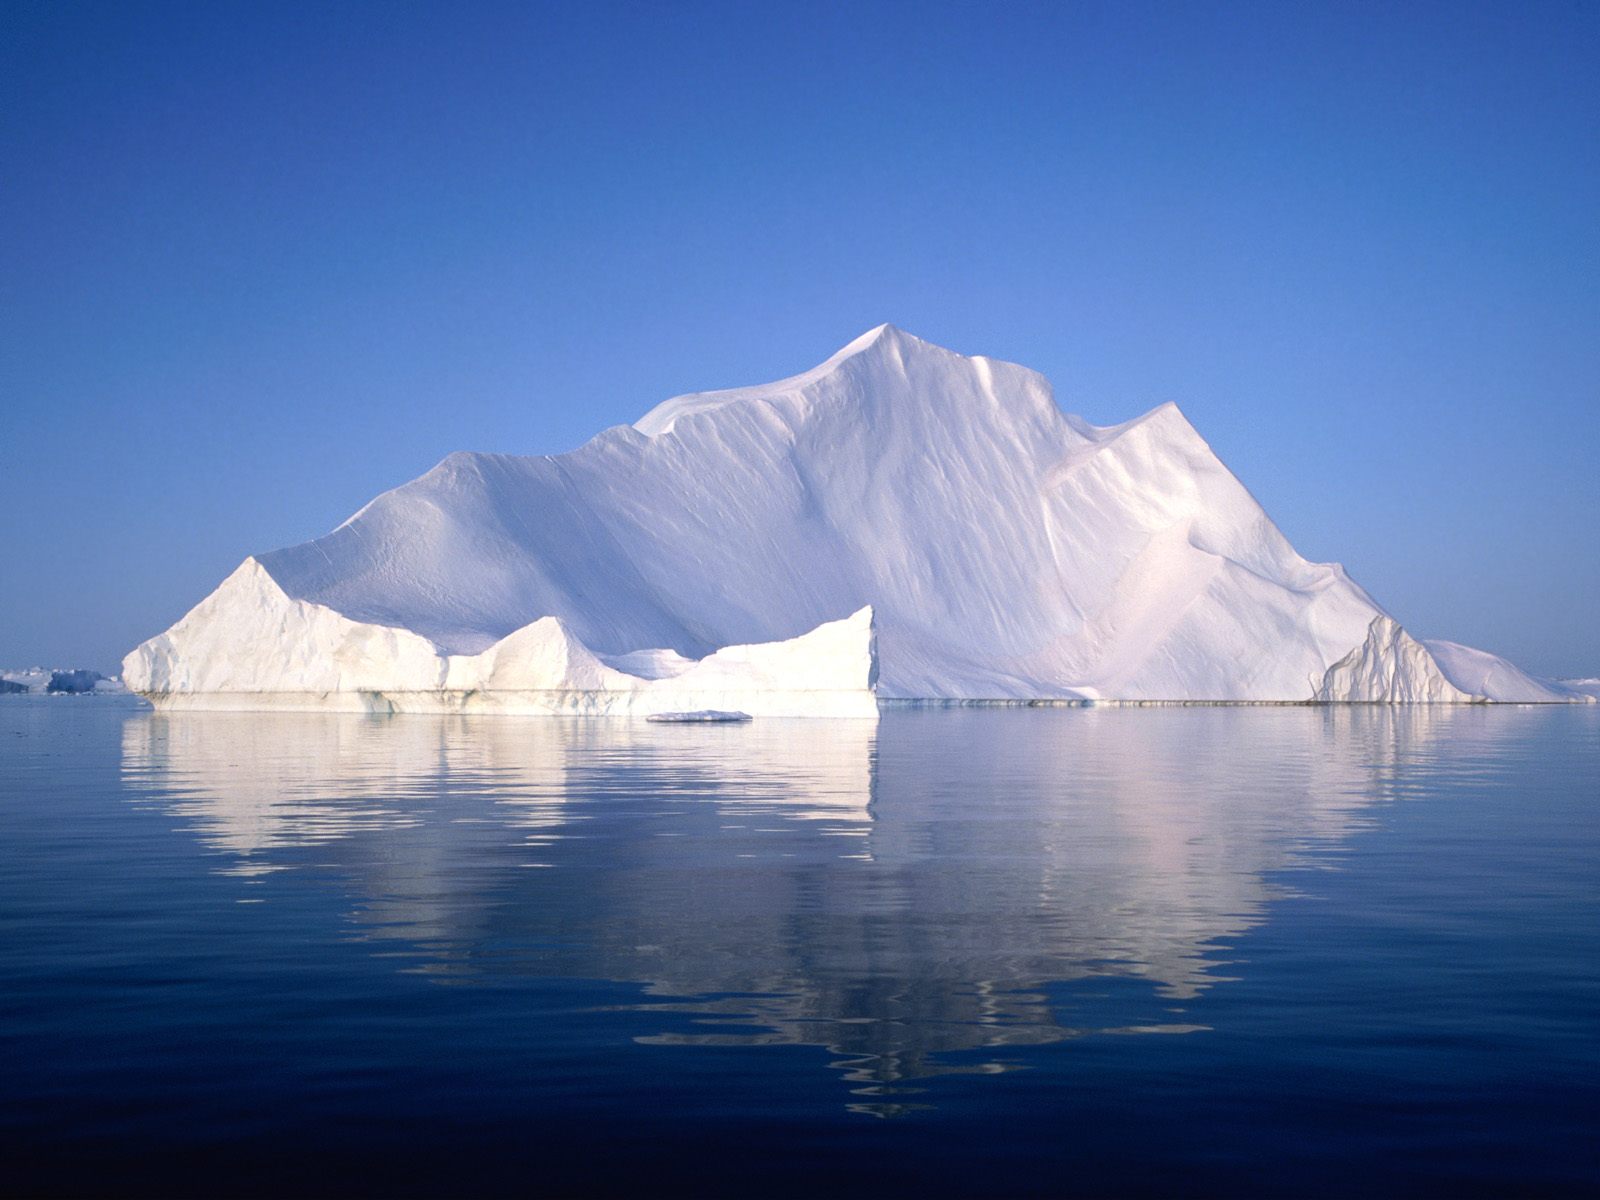 Picturespool Antartica Icebergs Wallpaper Pictures